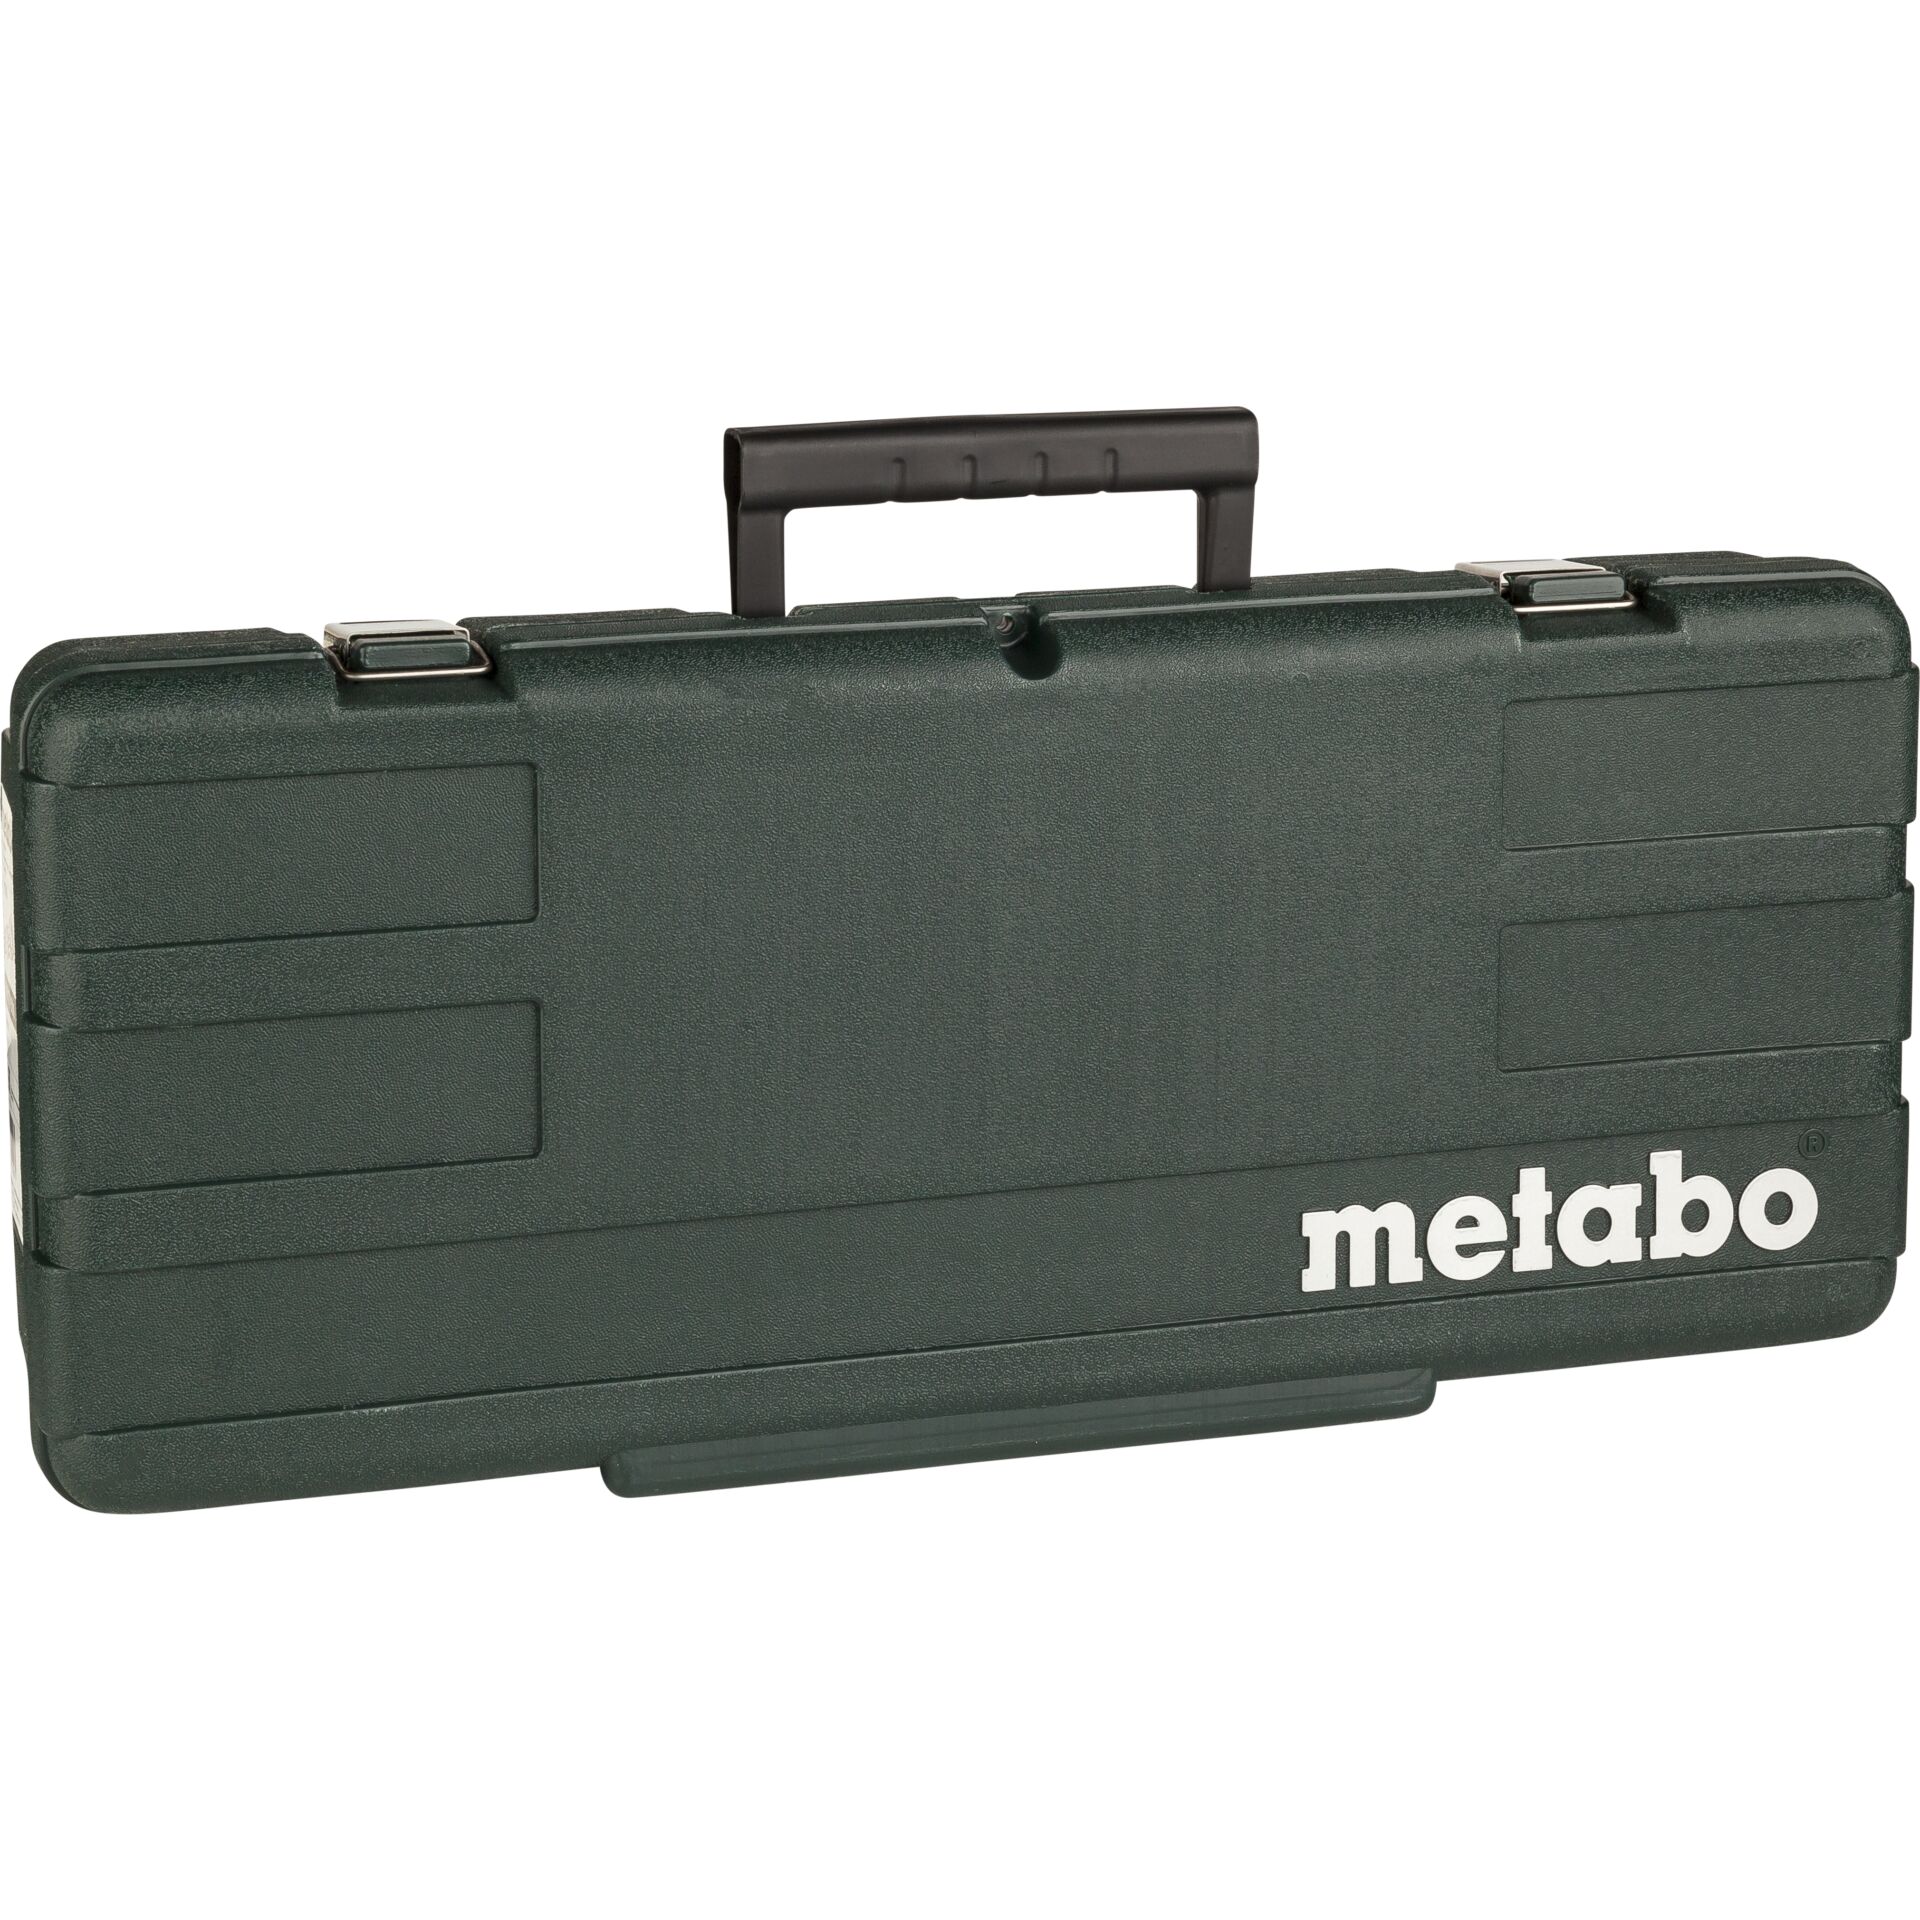 Metabo -SSE 1100 Säbelsäge 1100 W Hub-Länge 28 mm (606177500) -Metabo  Hardware/Electronic